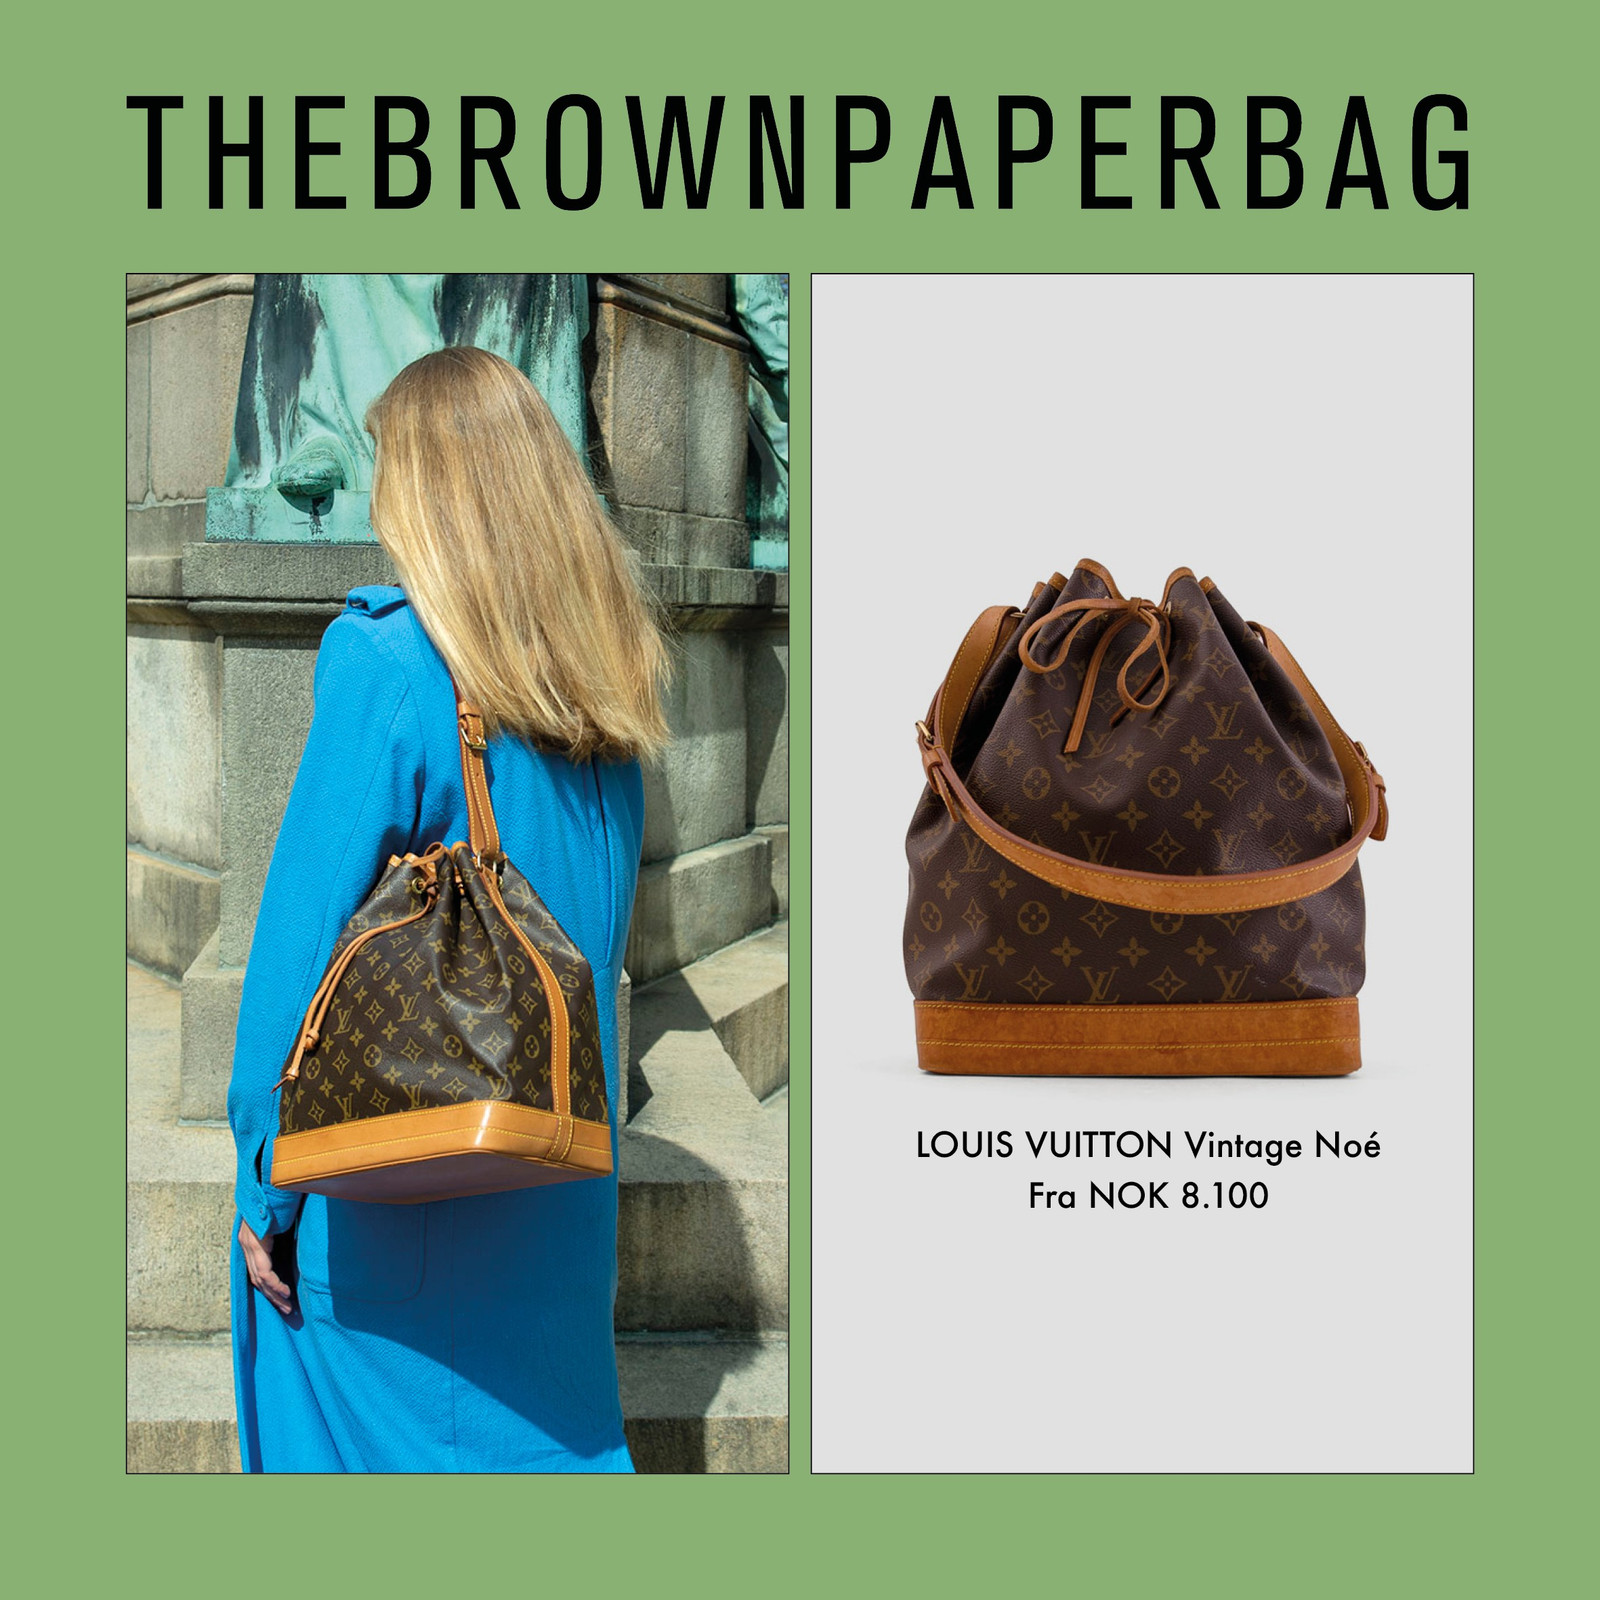 LOUISE TOTE MINI WESST Maroon Casual Solid Tote Bag – Miniwesst